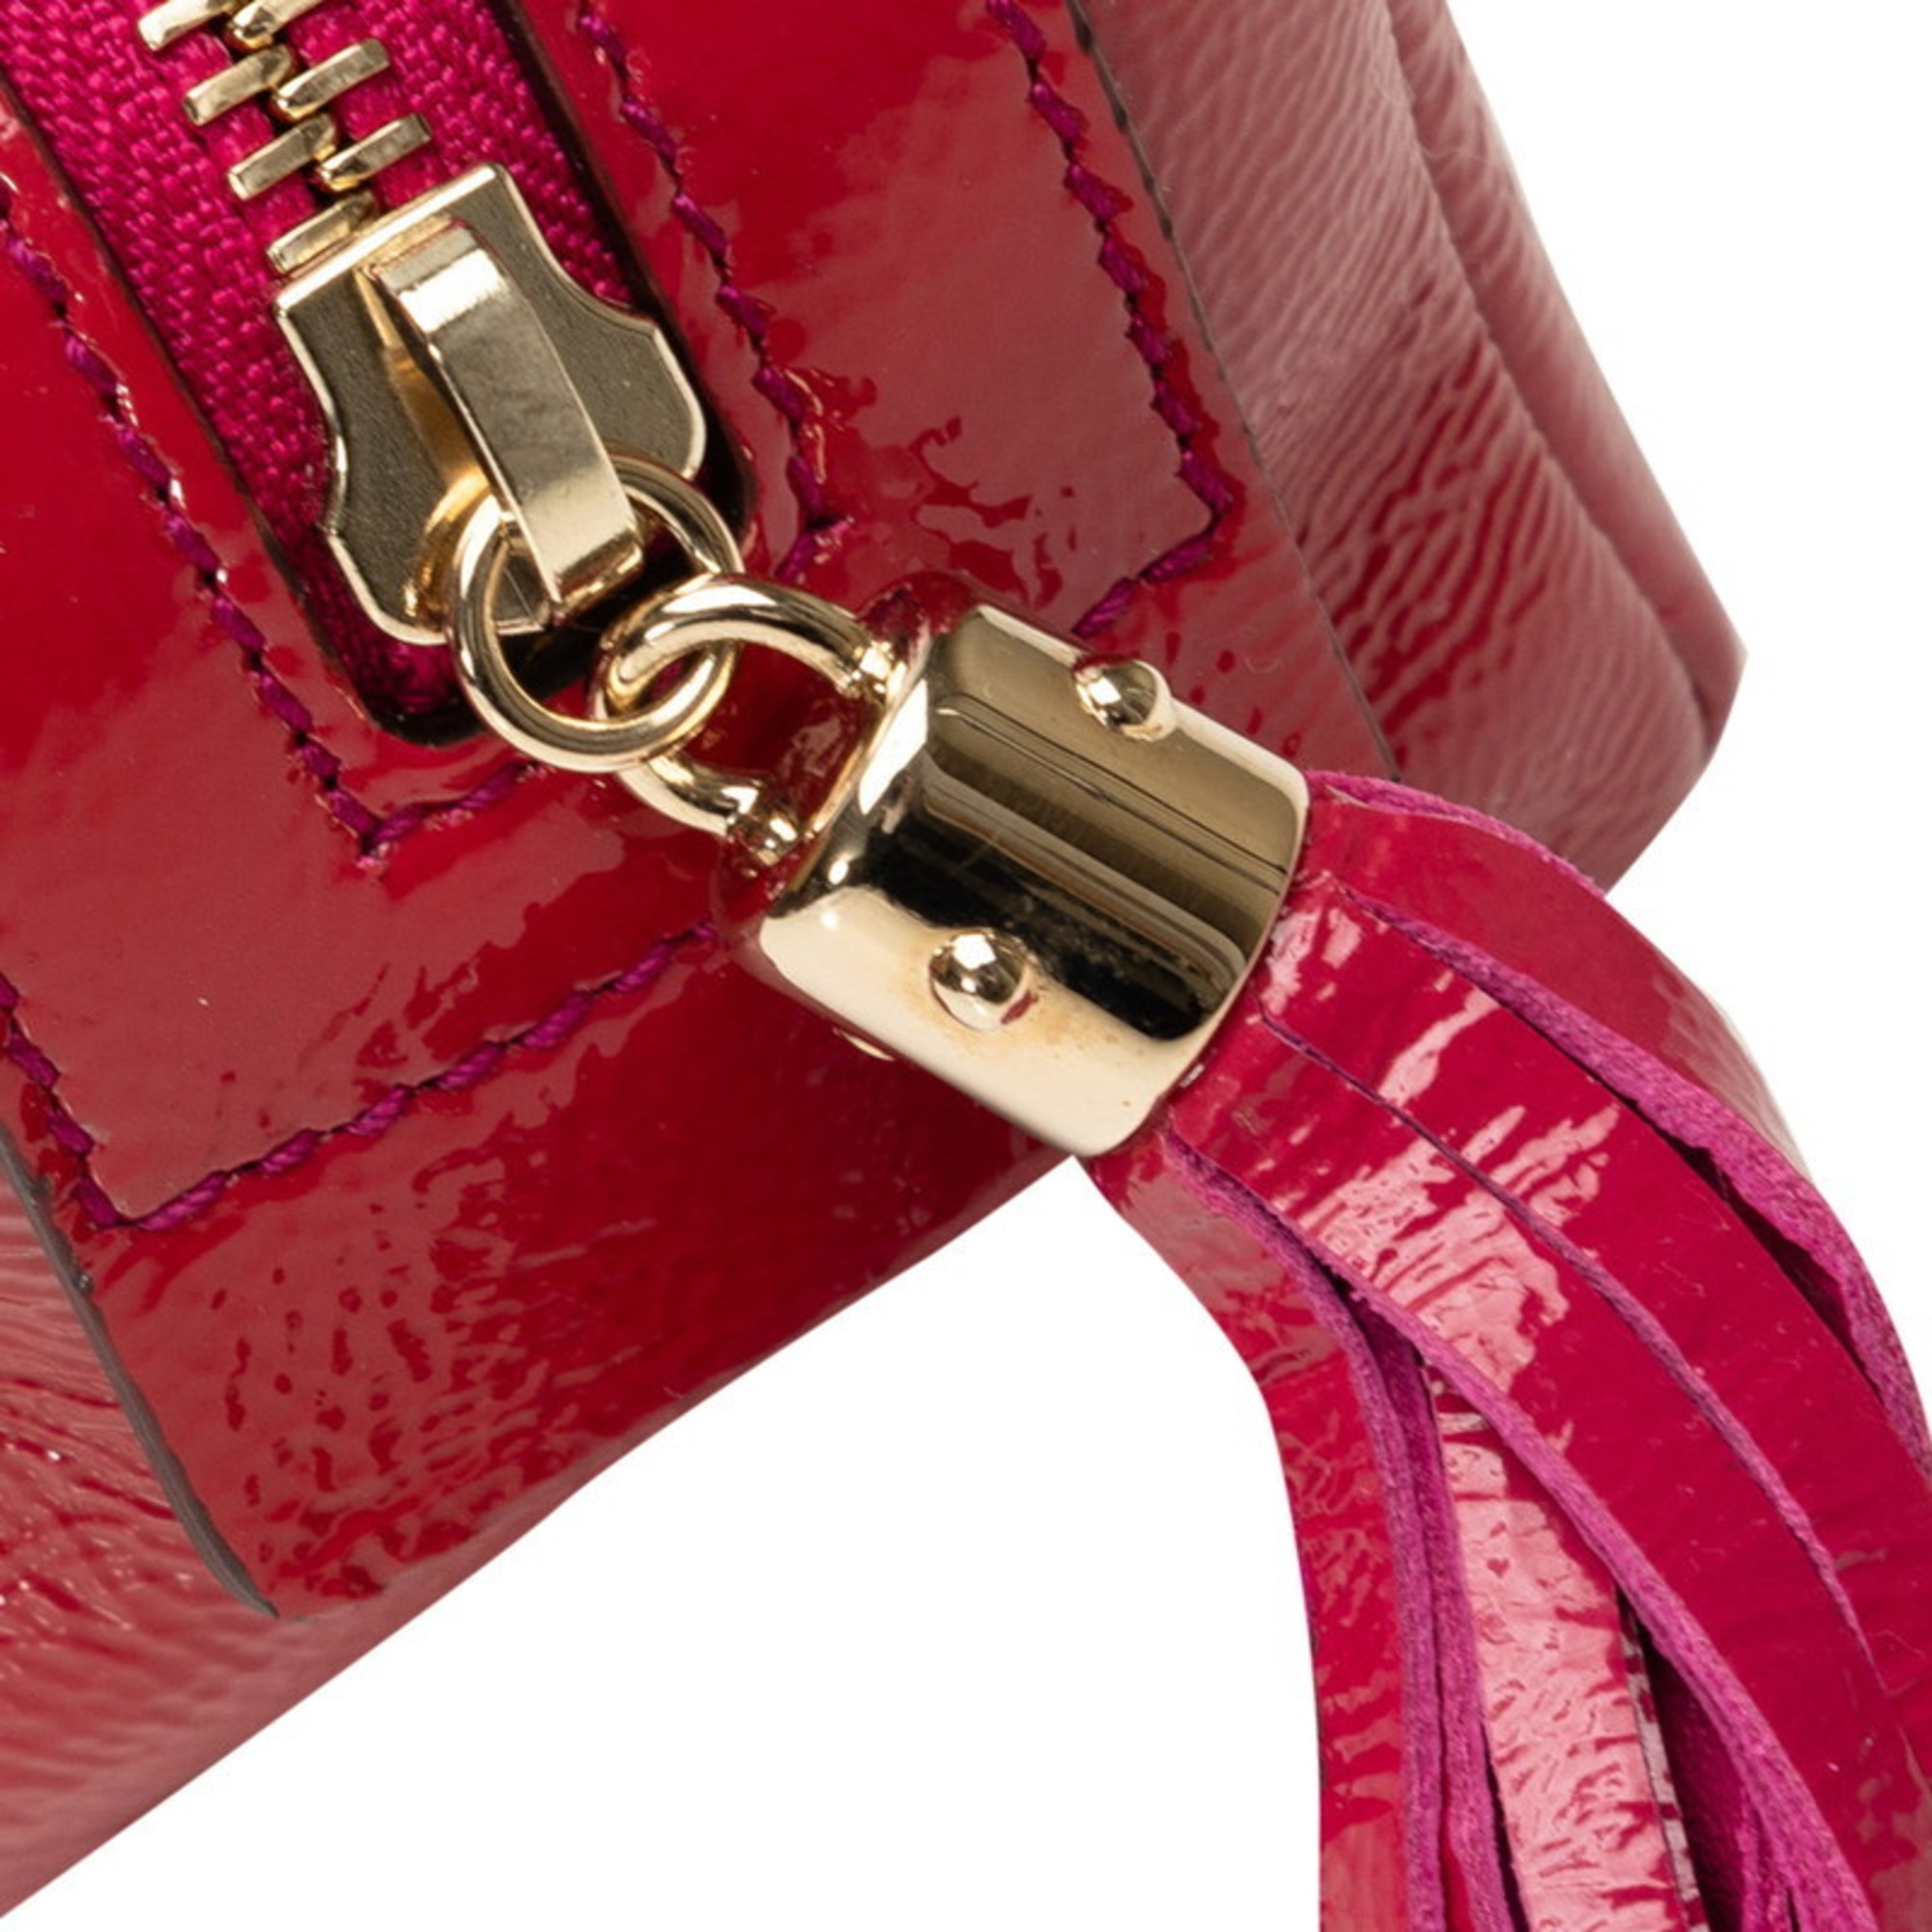 Gucci Interlocking G Soho Pouch 308634 Pink Patent Leather Women's GUCCI